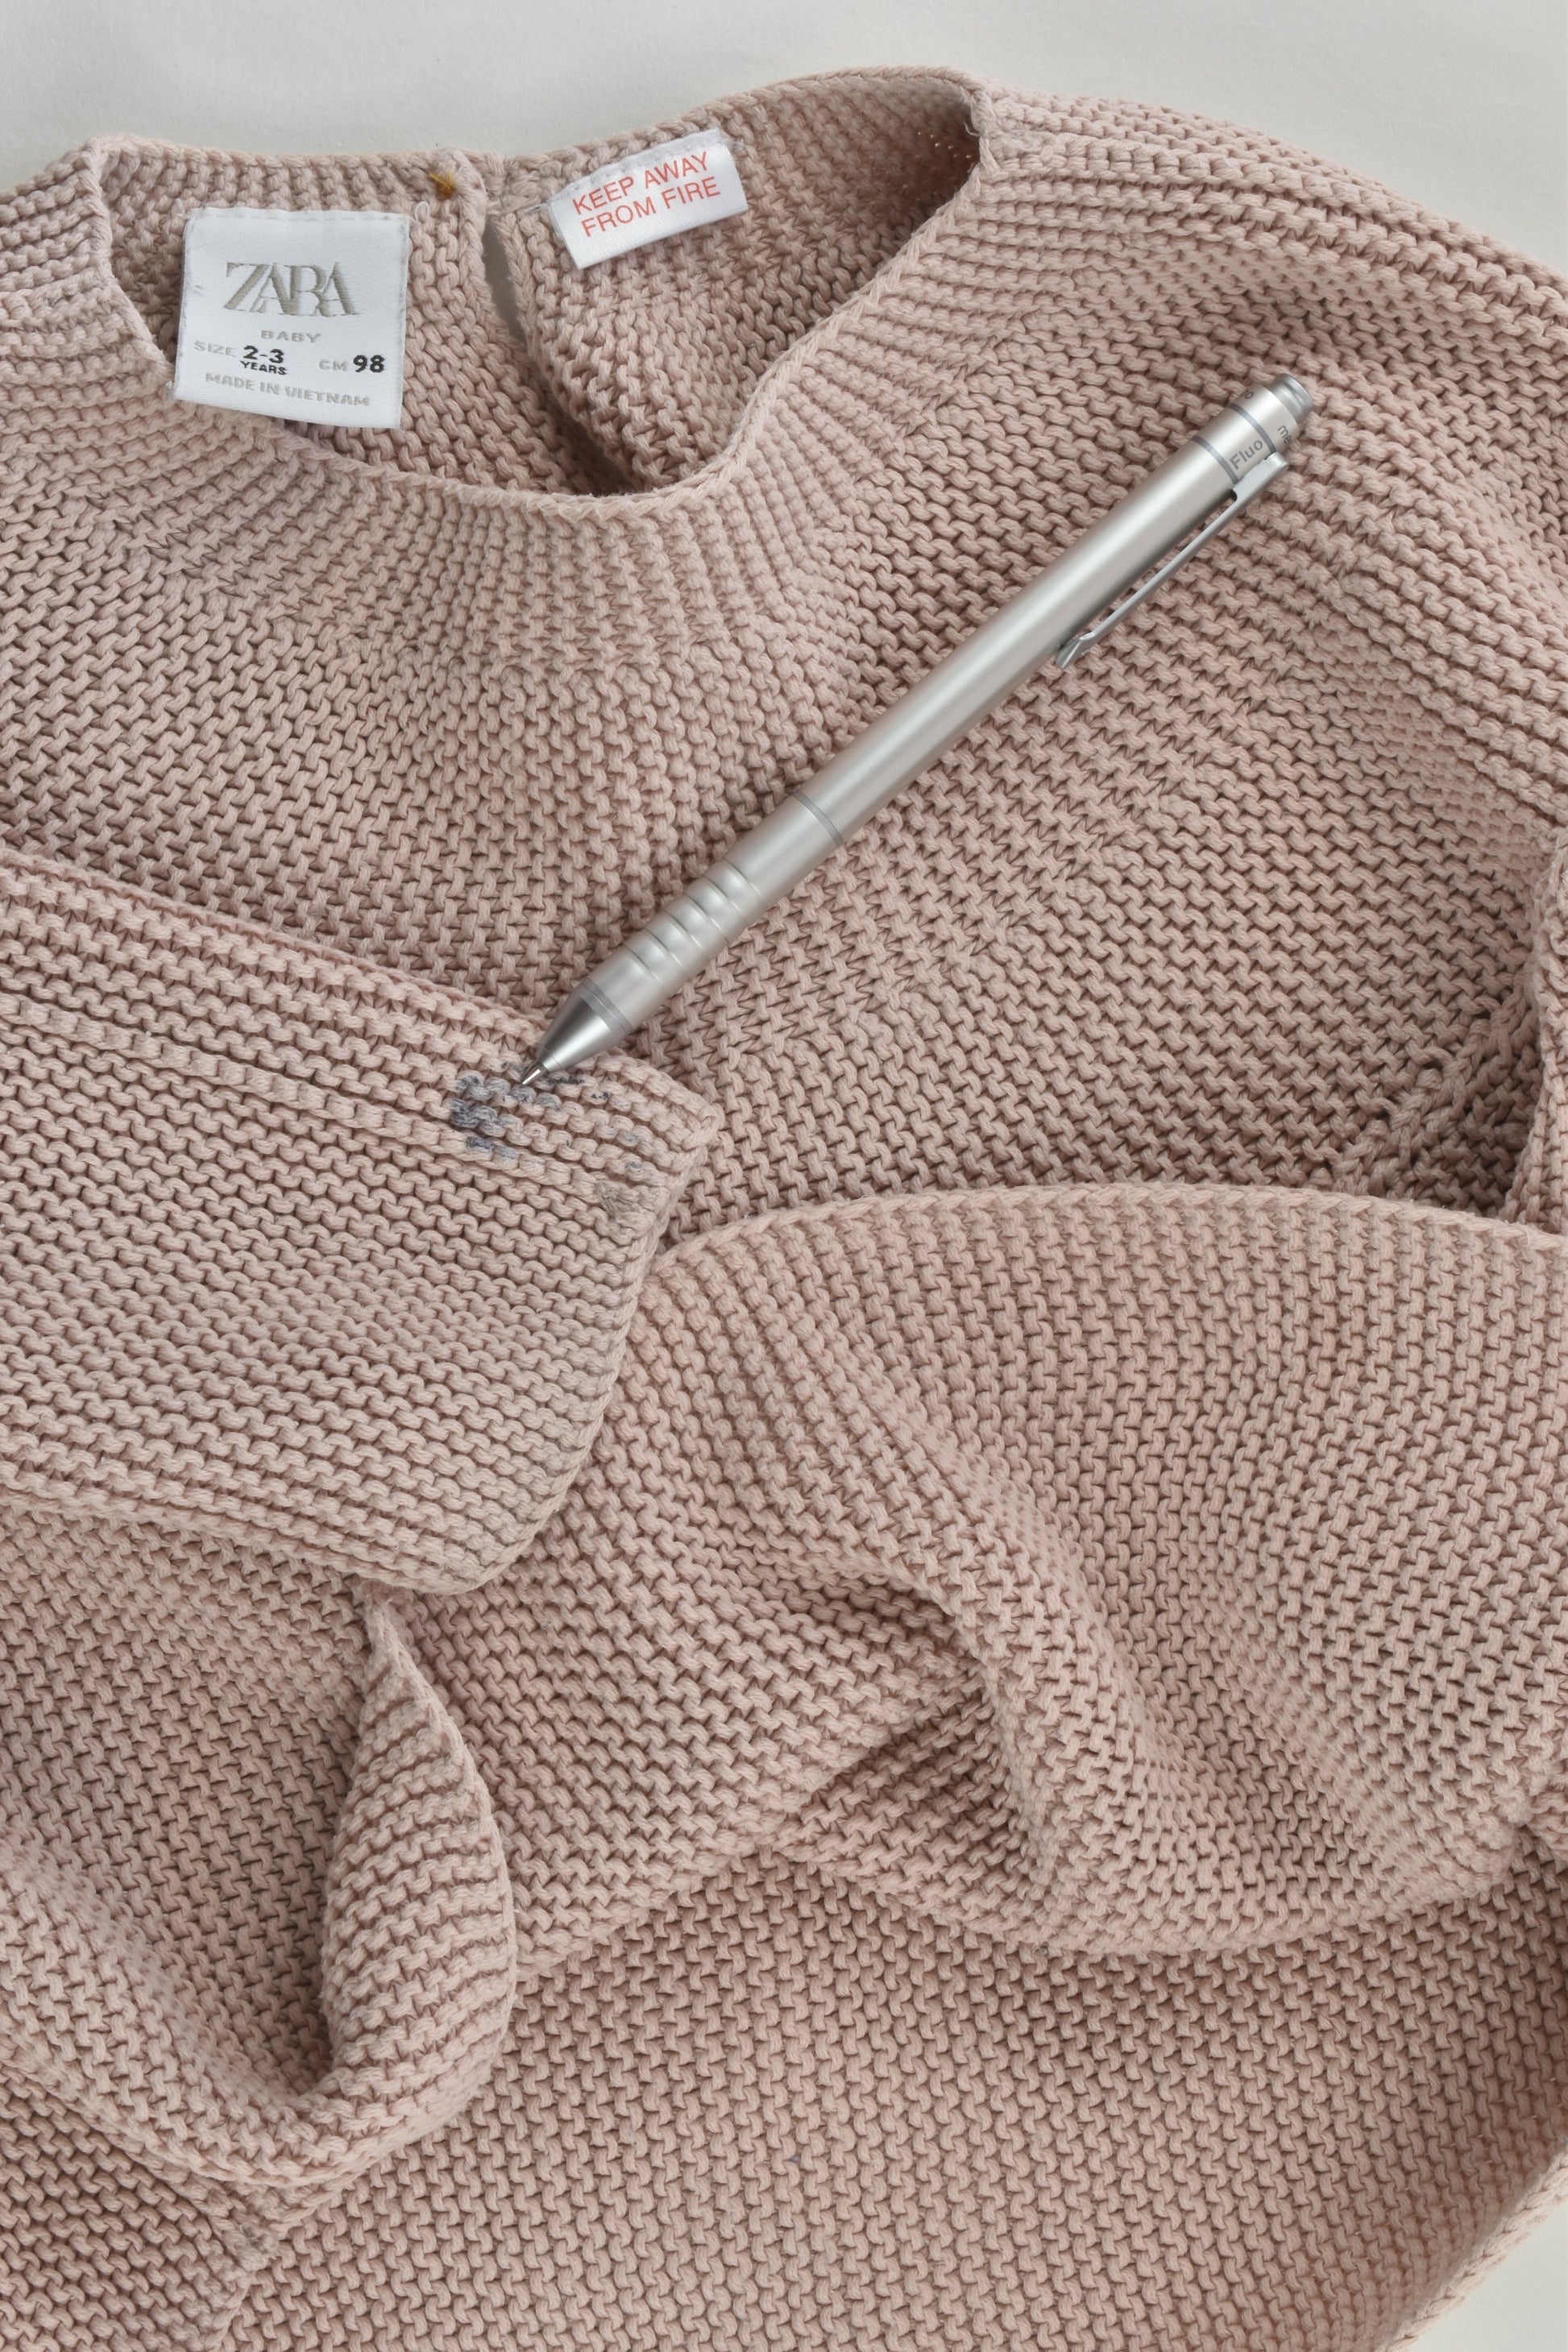 Zara Size 2-3 (98 cm) Knit Jumper